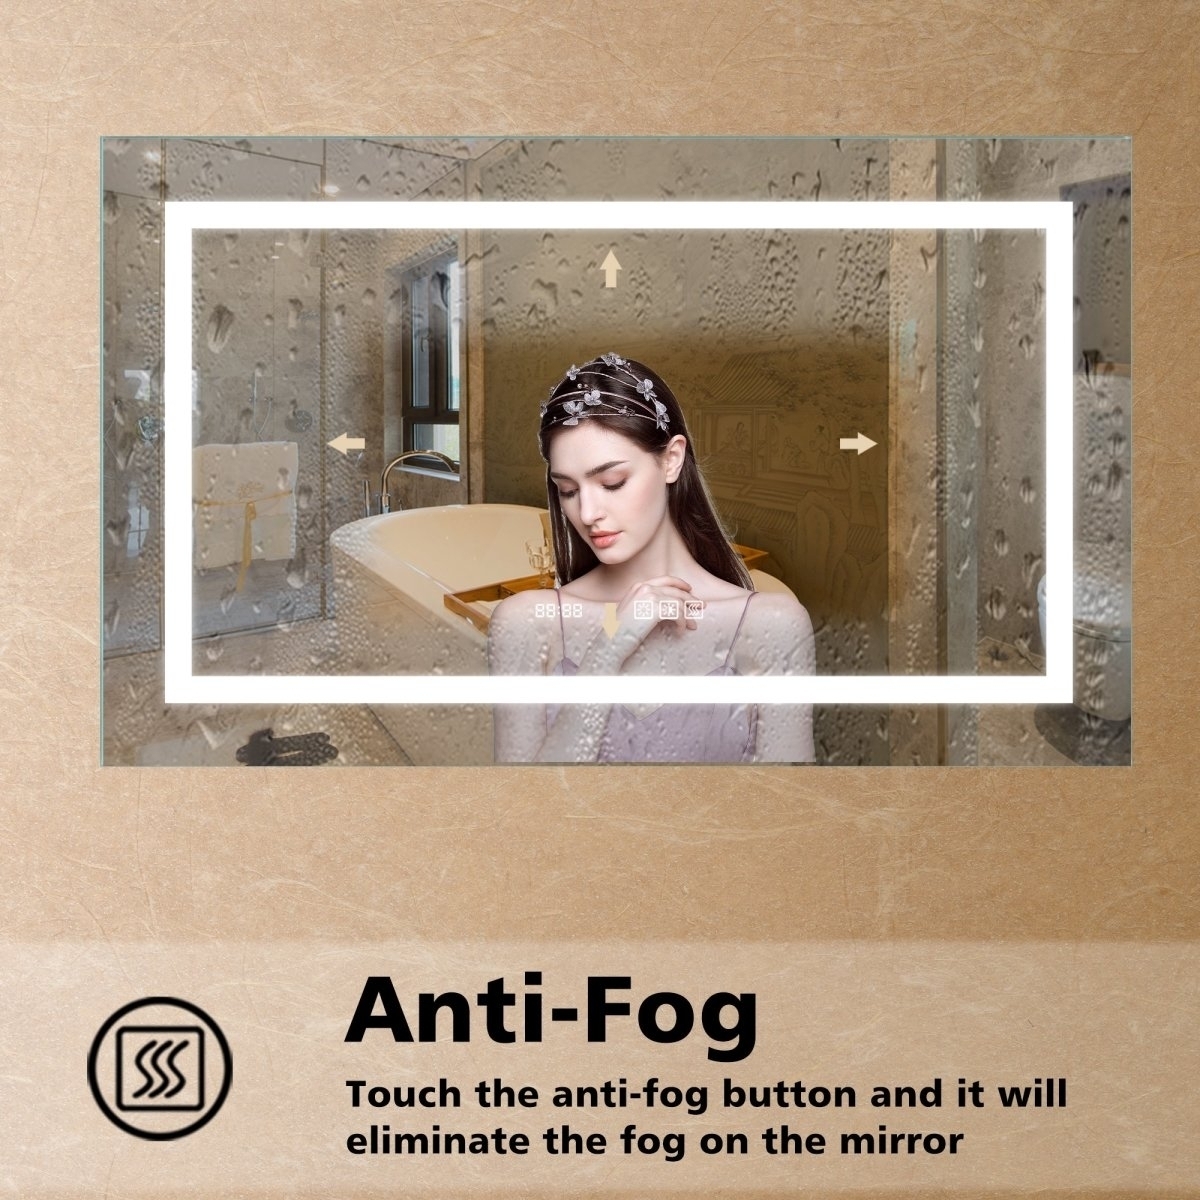 Ascend-M2 40 W X 24 H Bathroom Led Light Mirror Anti Fog With Digital Clock Lighted Vanity Mirror